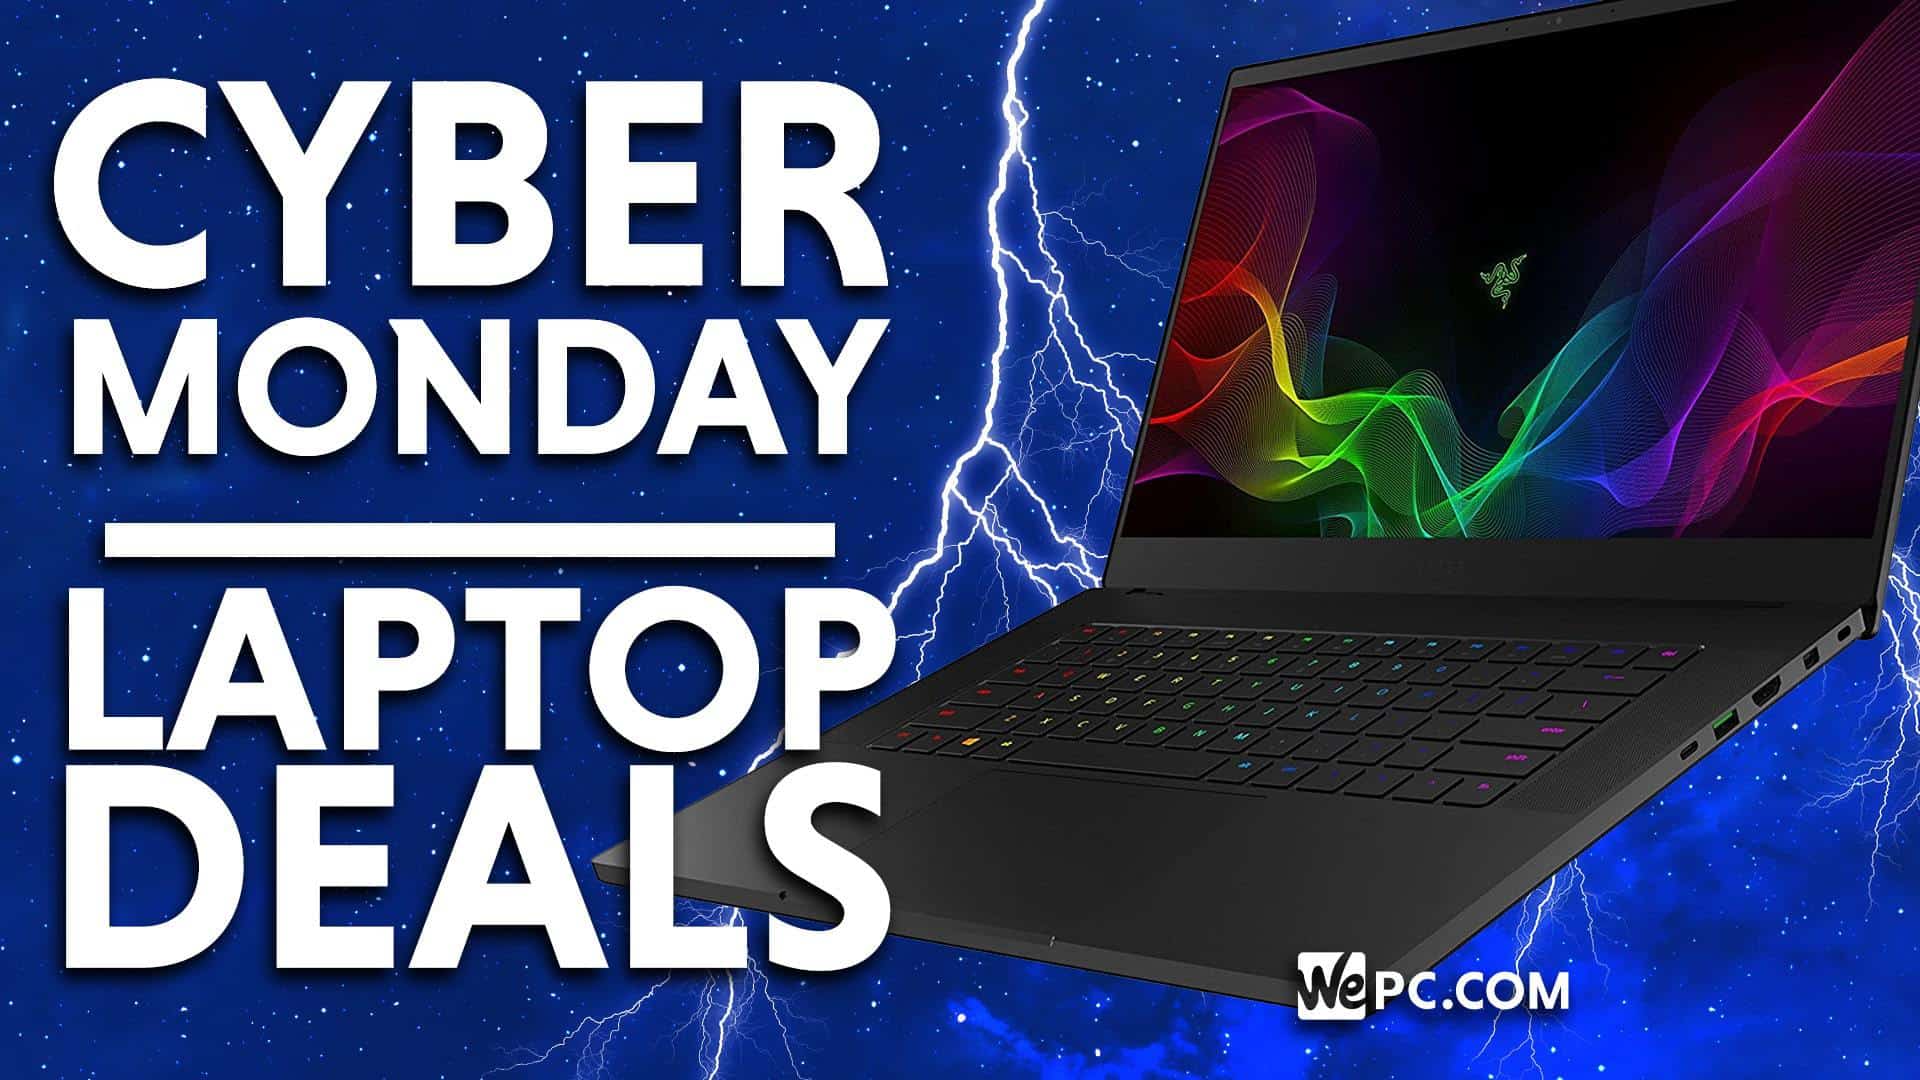 Cyber Monday Laptop Deals 2020 Wepc Lets Build Your Dream Gaming Pc